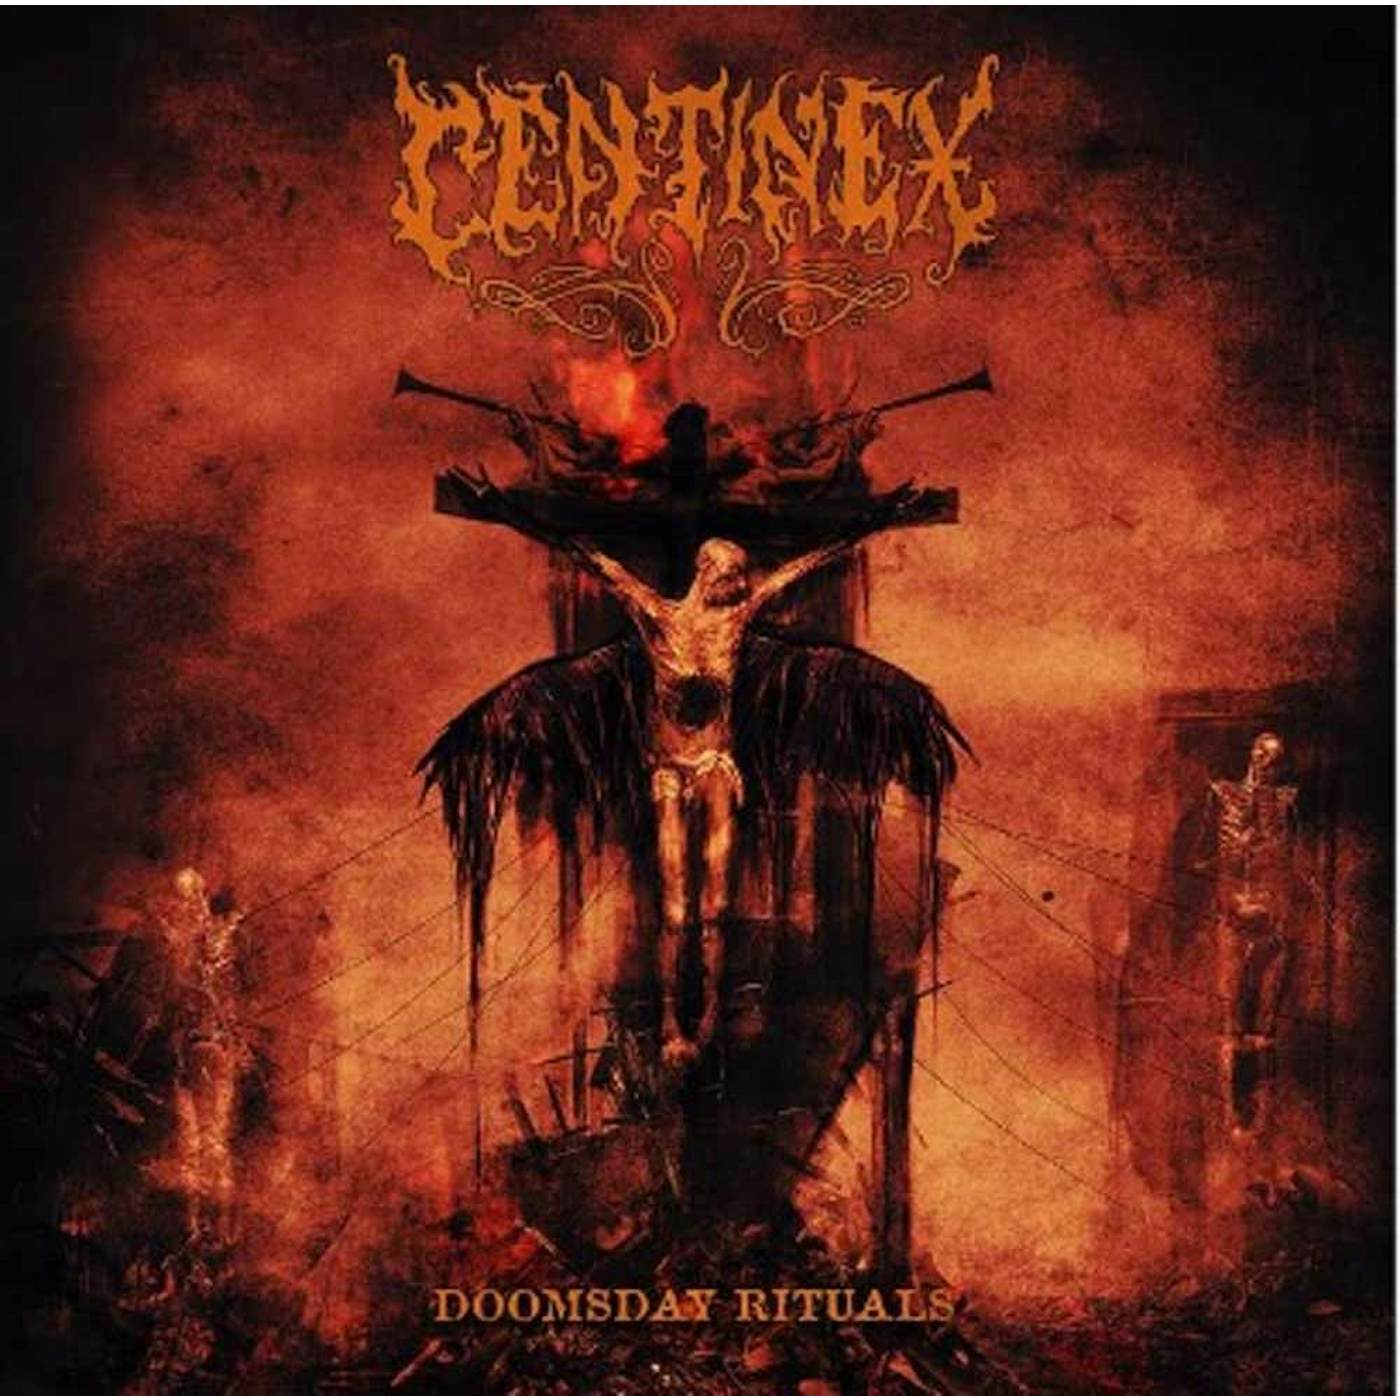 Centinex LP - Doomsday Rituals (Vinyl)